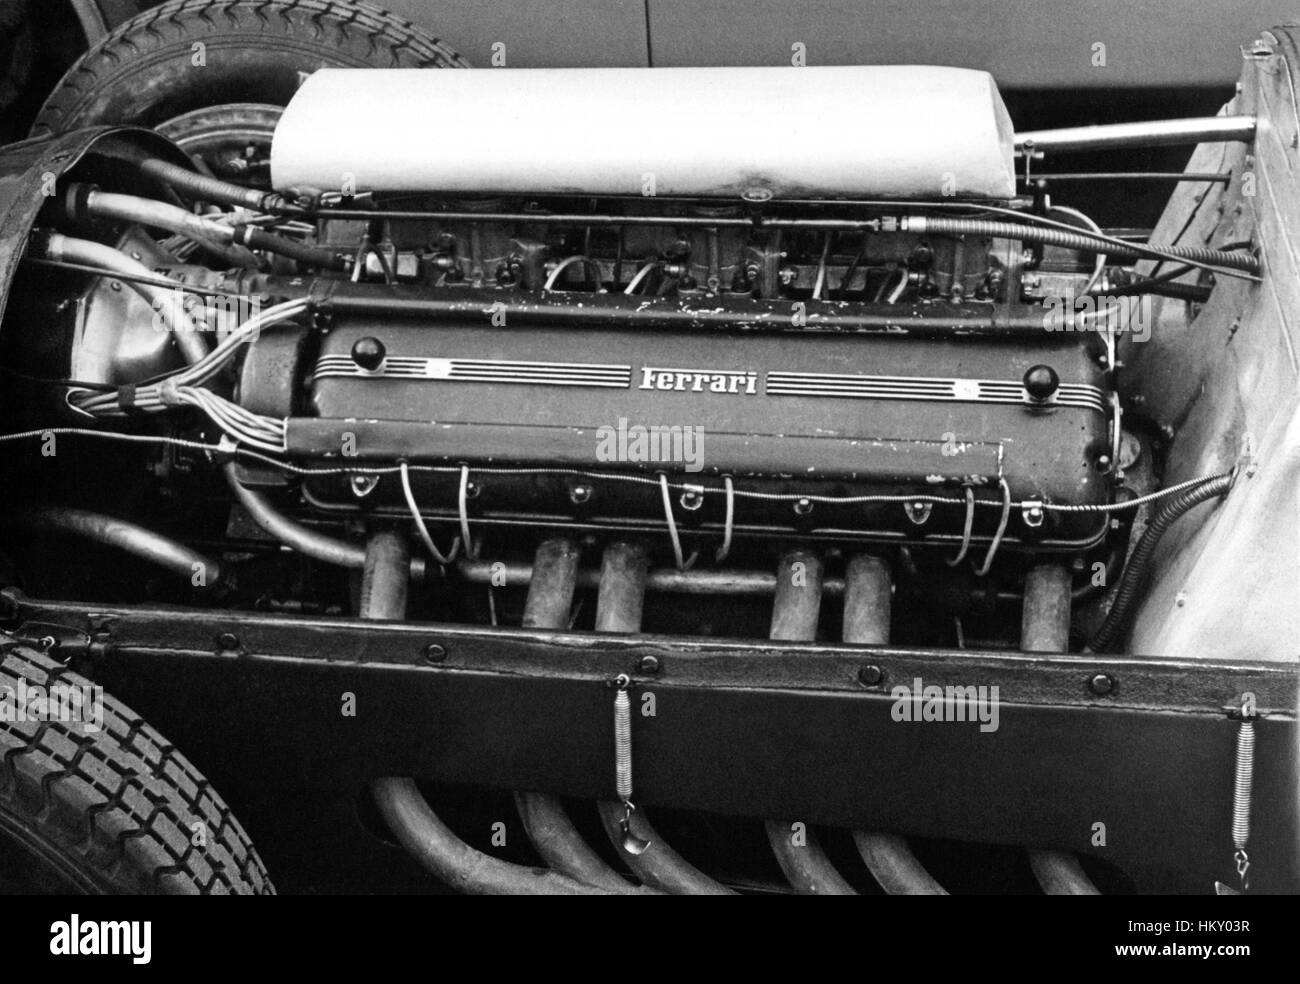 1954 Ferrari 375 F1 Engine Silverstone-GG Stock Photo